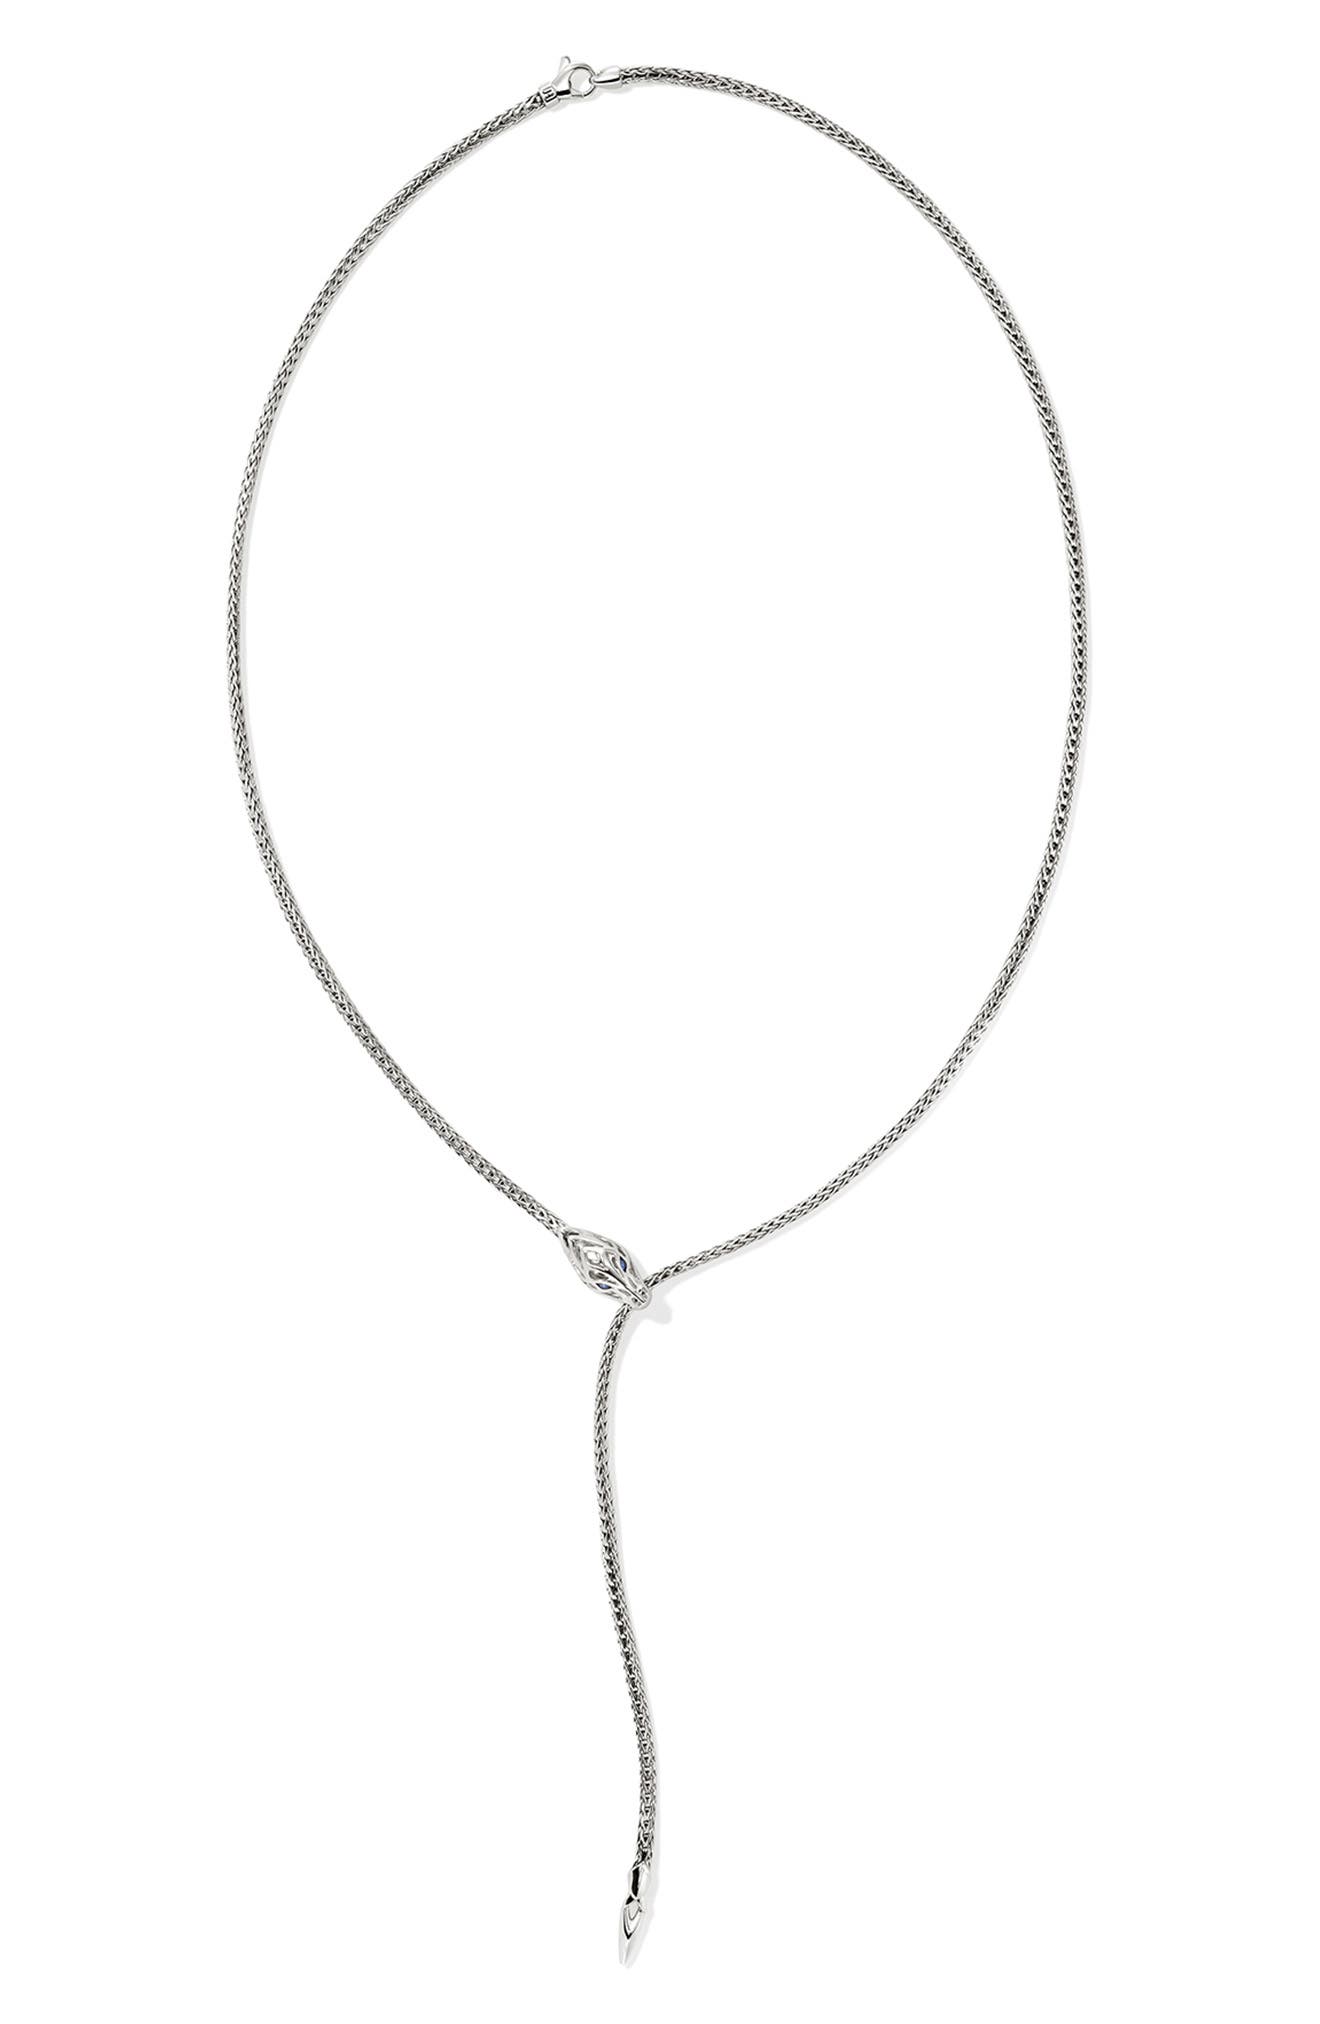 John Hardy Asli Link Lariat necklace - Silver